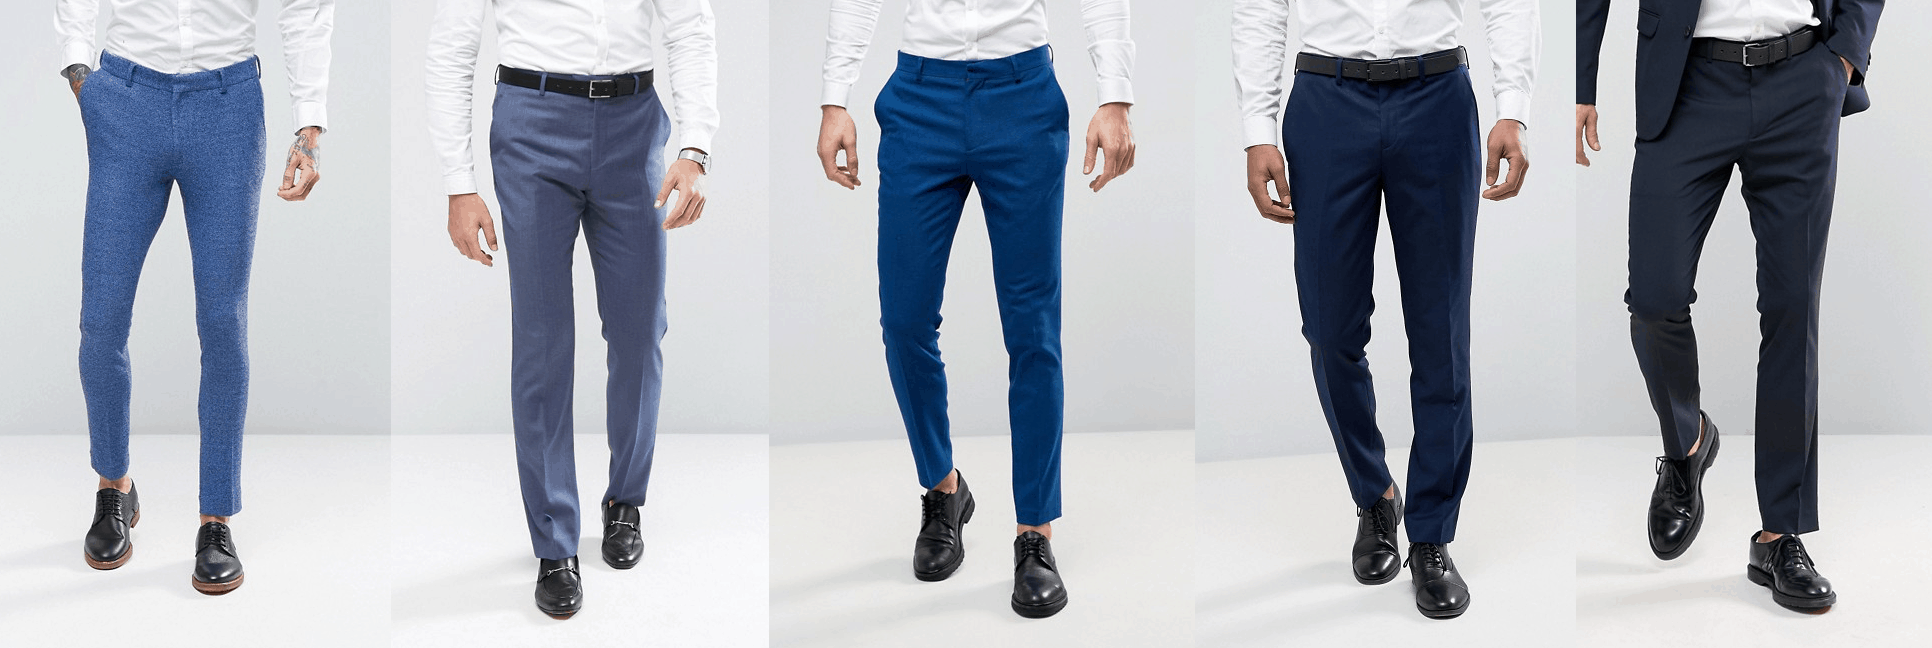 Blue Pants with Black Shoes - When it 